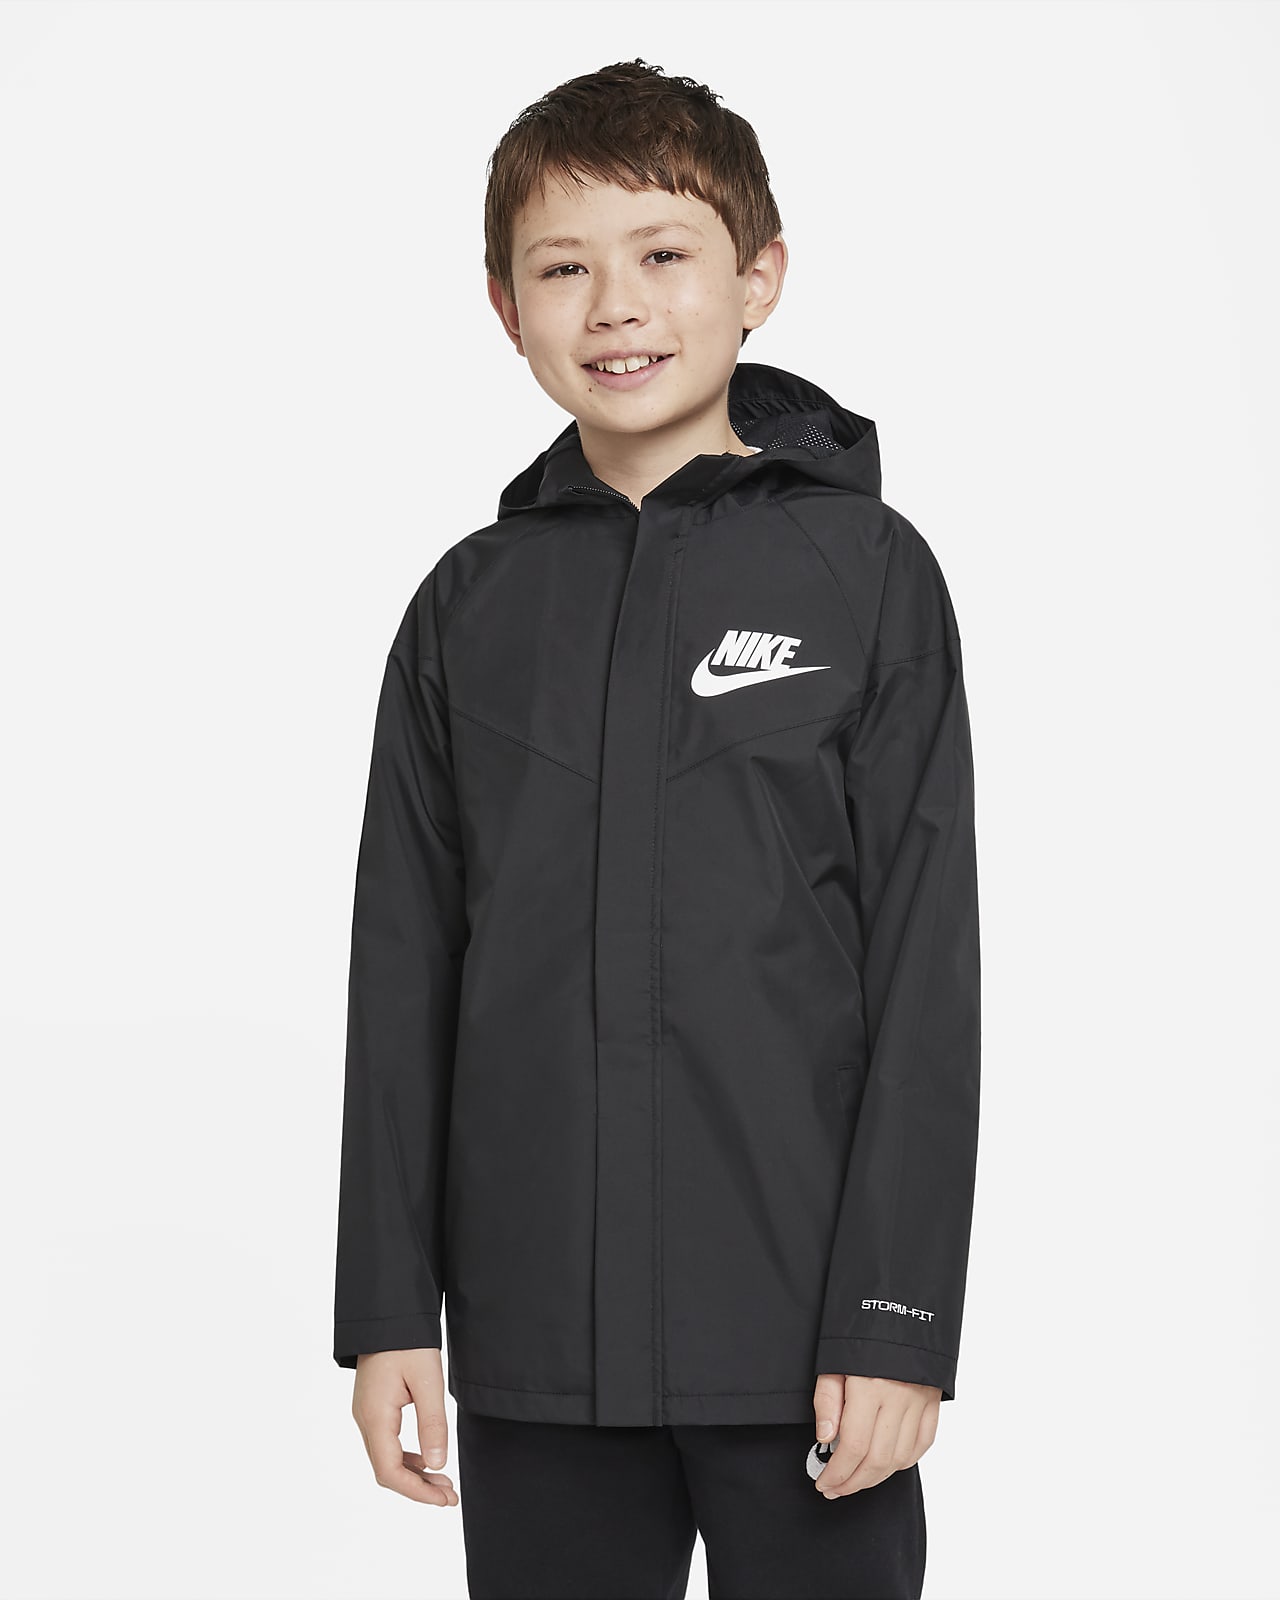 Nike Sportswear Storm-FIT Windrunner Jacke für ältere Kinder (Jungen)